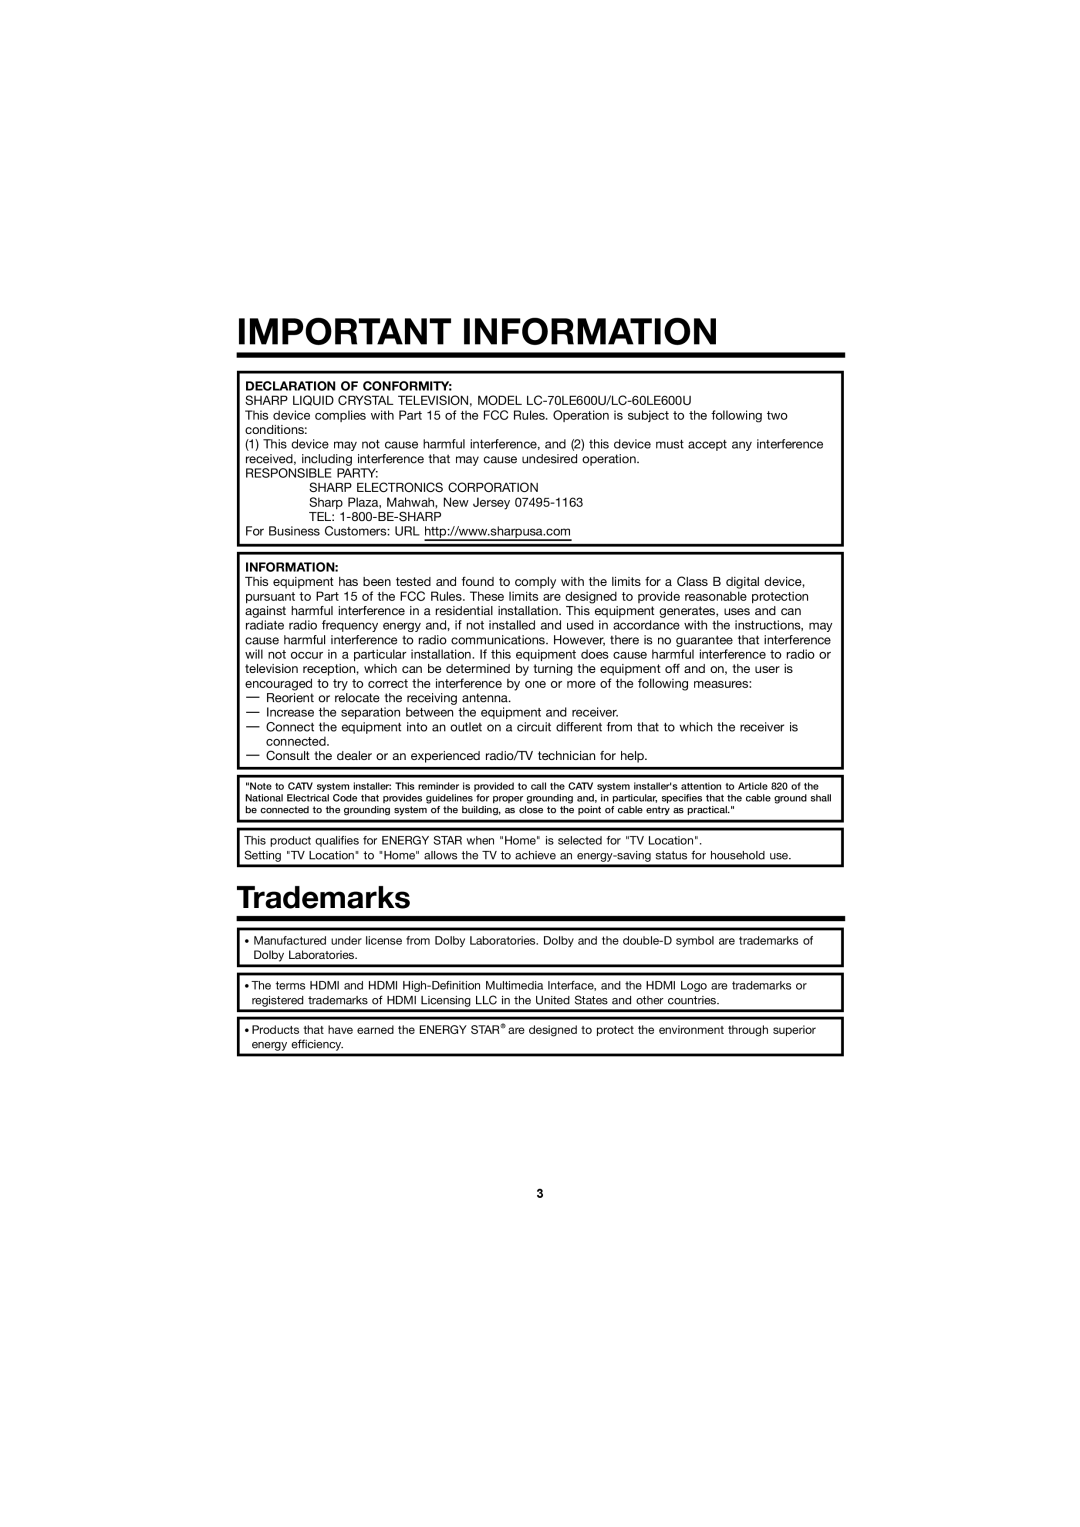 Sharp LC-60LE600U, LC-70LE600U operation manual Declaration Of Conformity, Important Information, Trademarks 